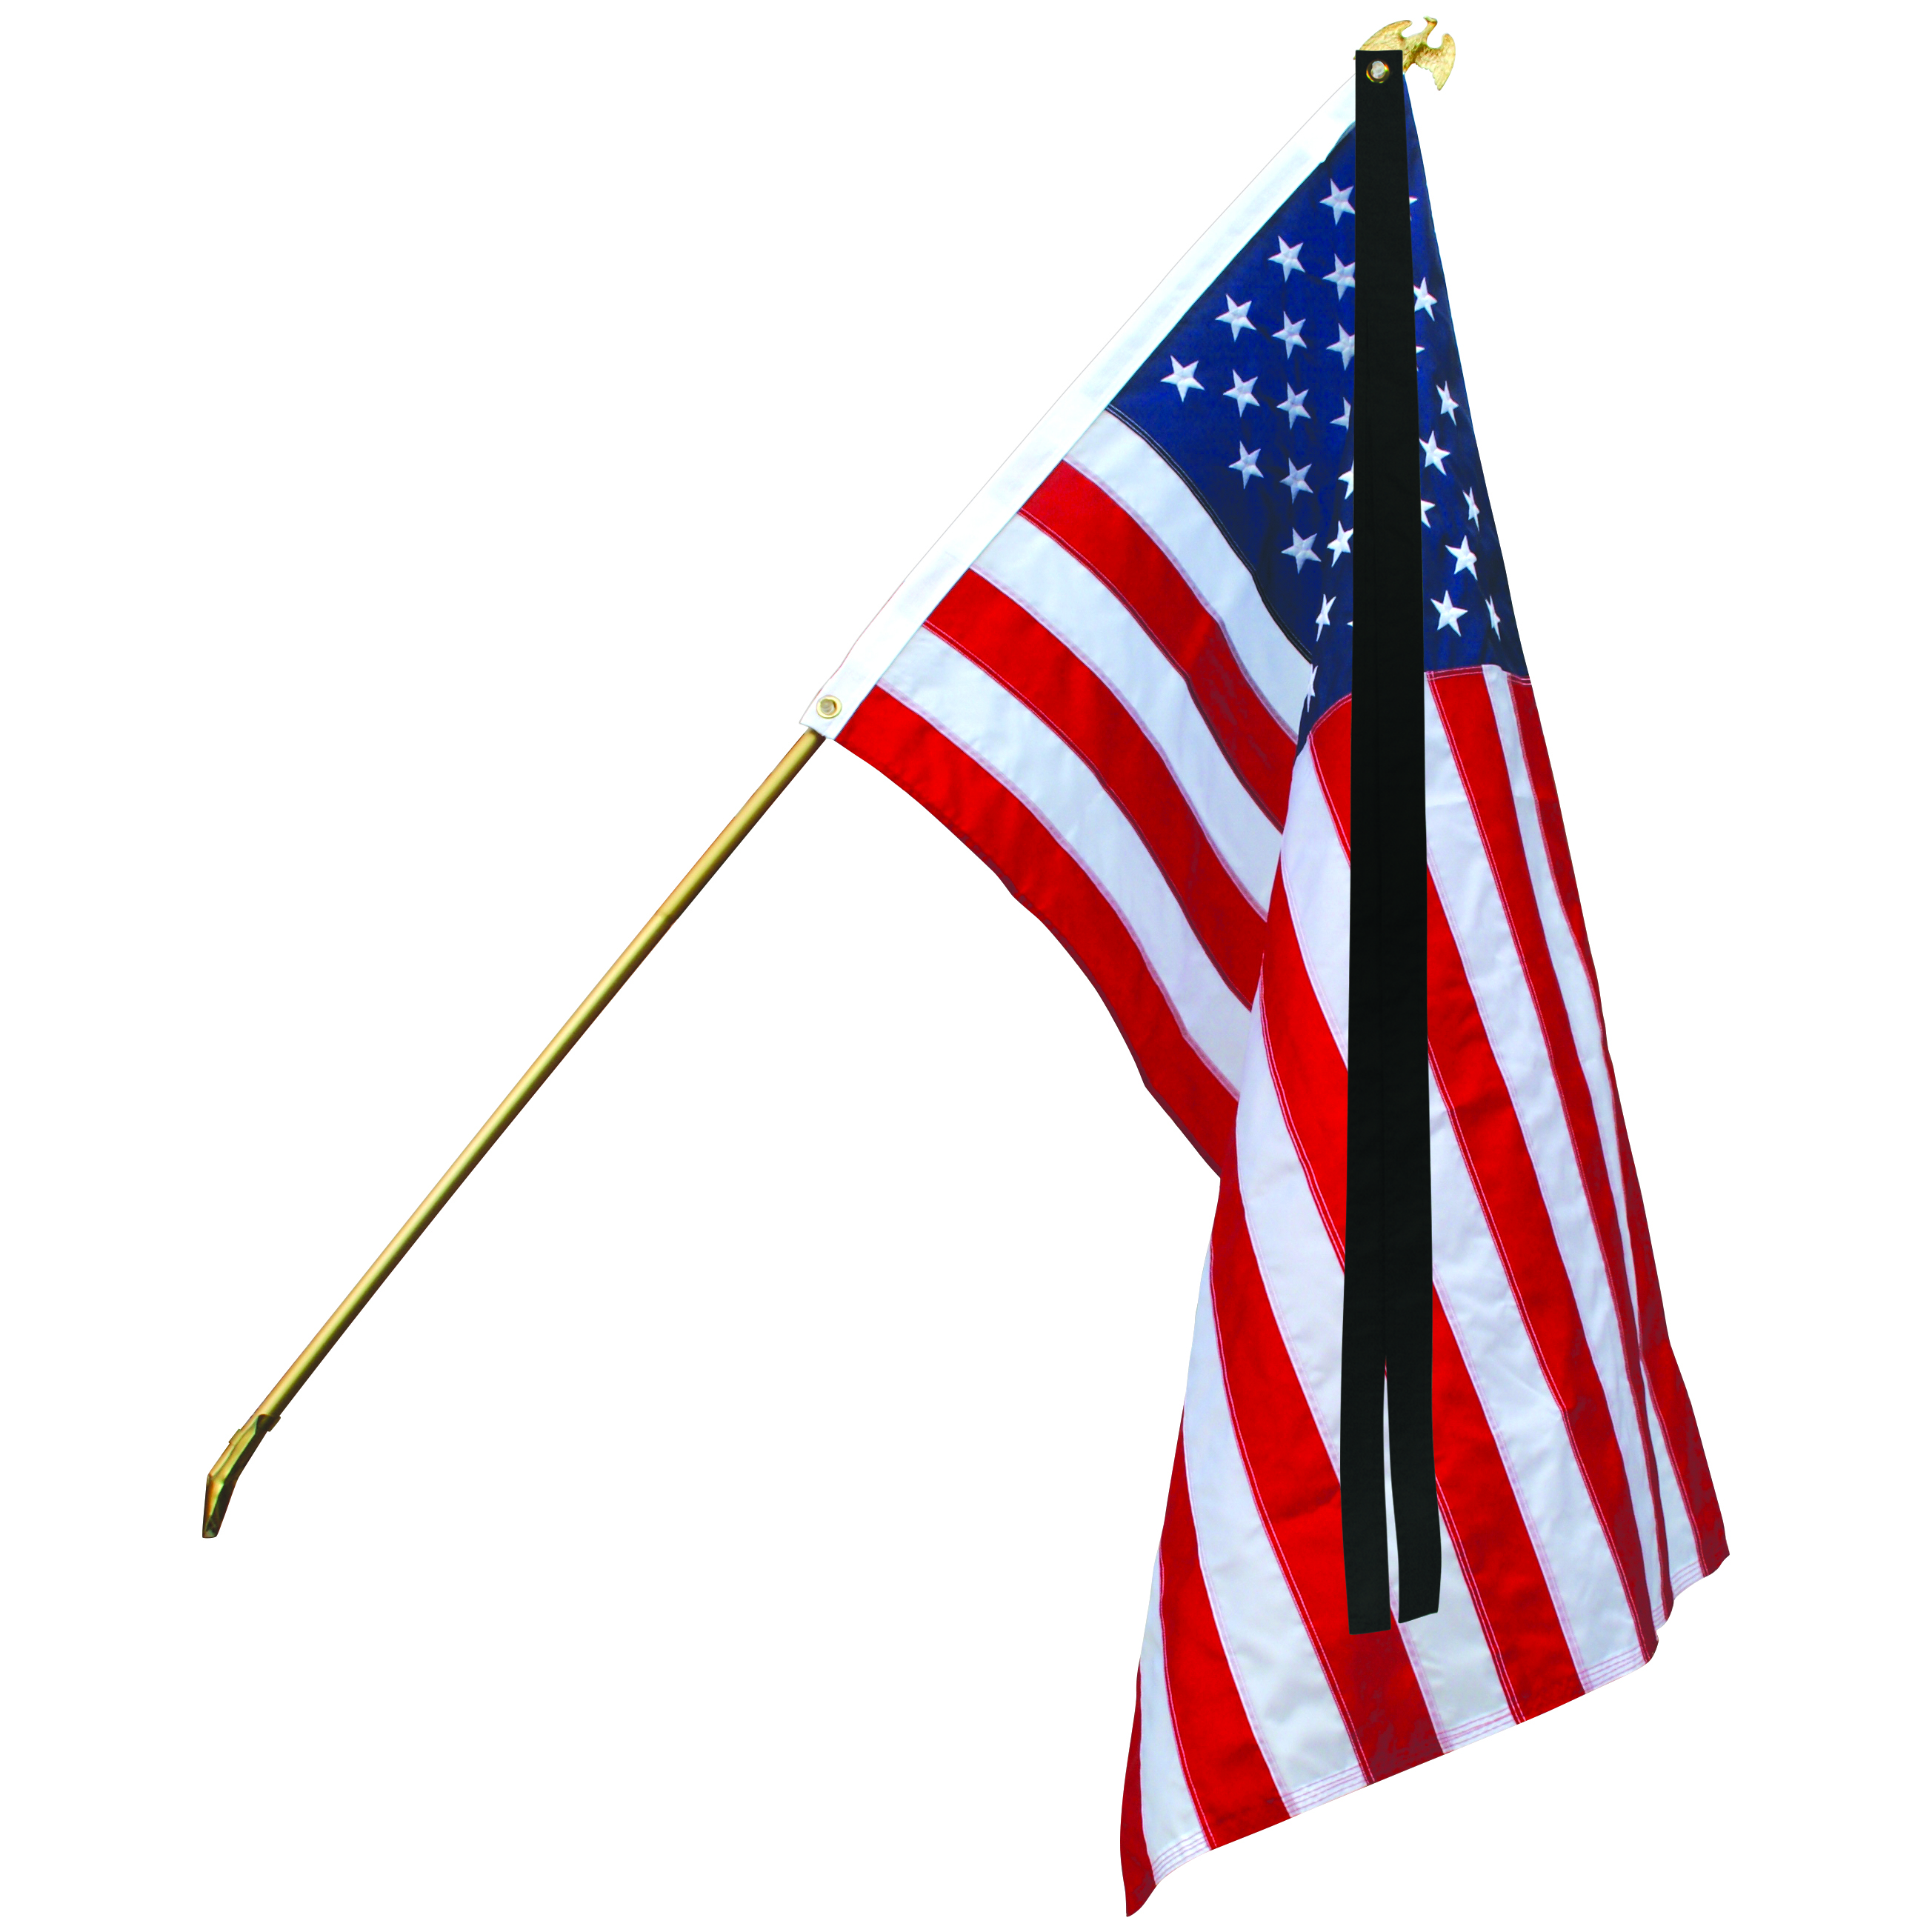 NEBRASKA State POLICE Protect and Serve USA FLAG Sew Iron On PATCH SET 3 Pcs New 